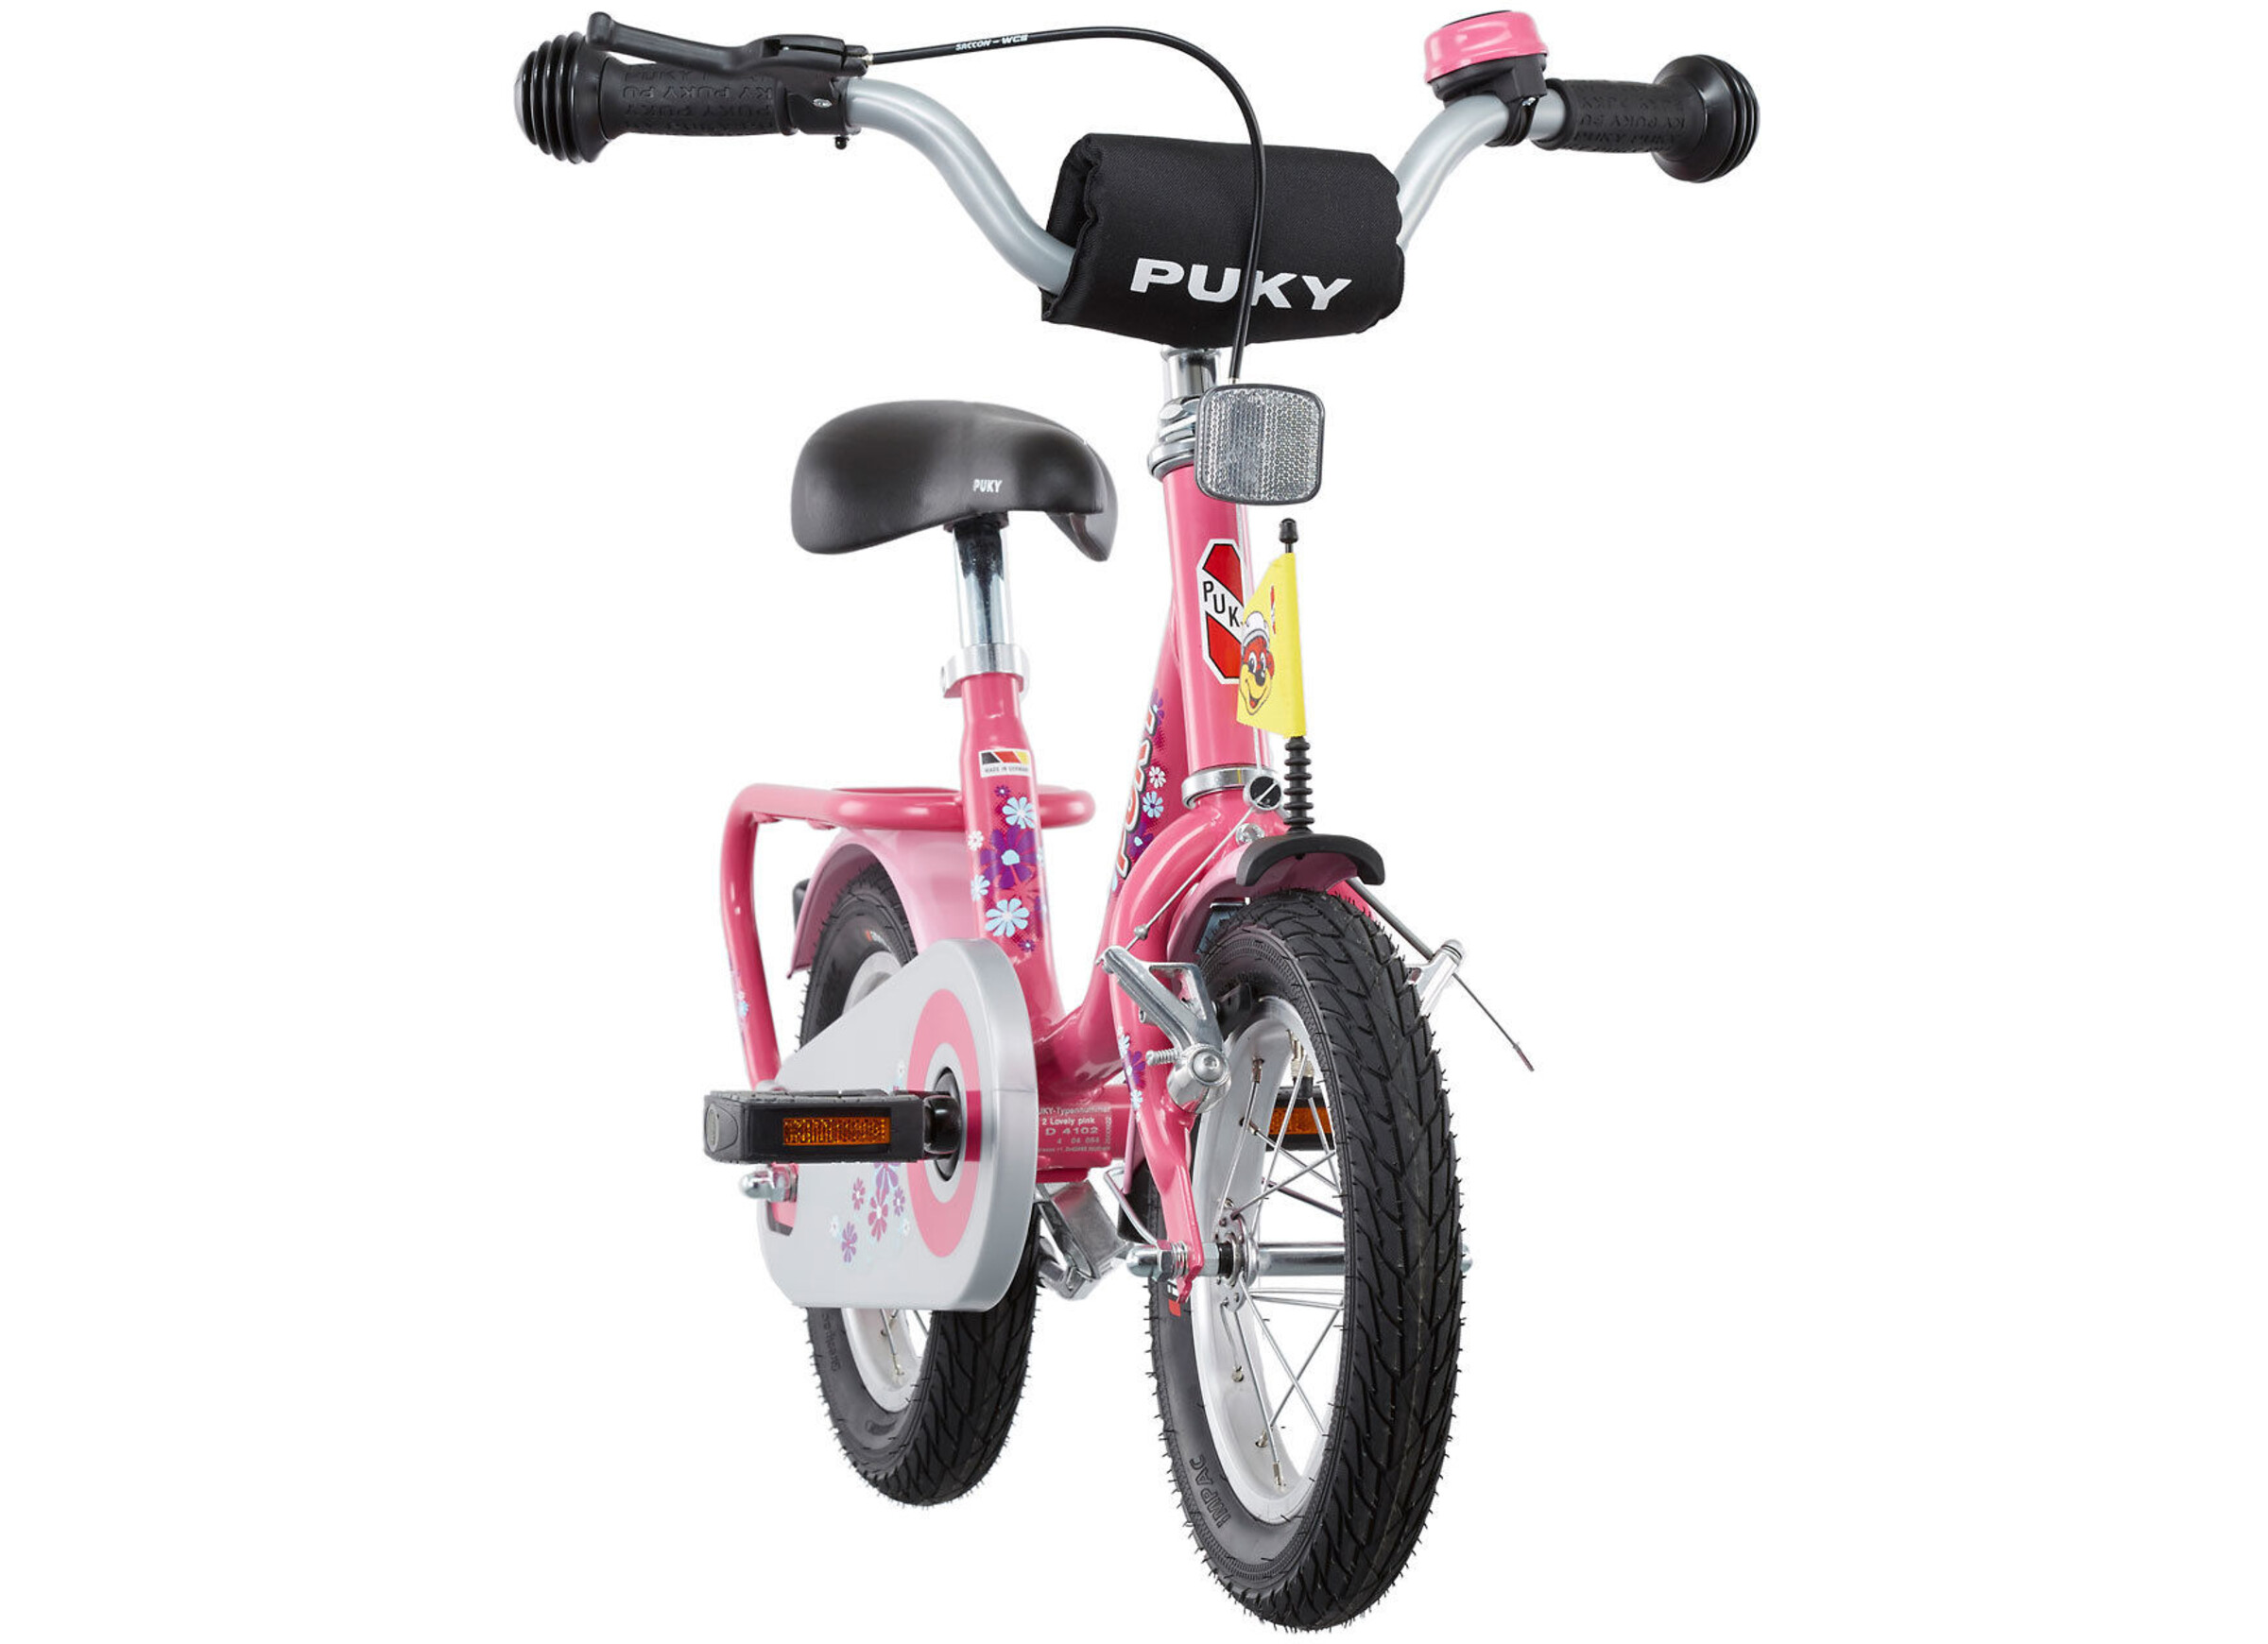 Puky Z2 Kinderfahrrad 12 LovelyPink online kaufen fahrrad.de